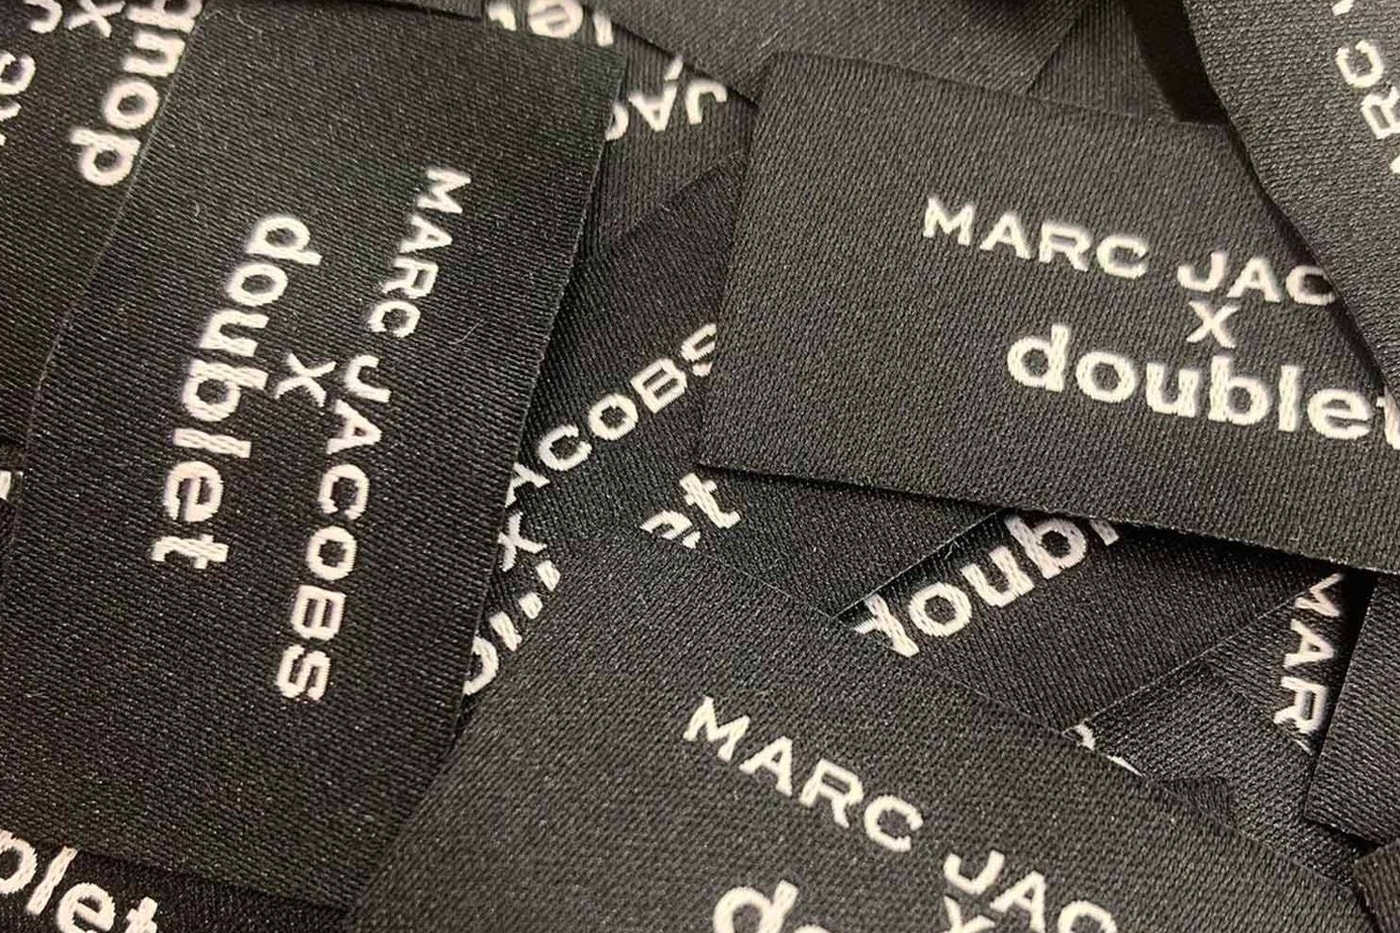 Marc Jacobs doublet Collaboration Teaser Info Masayuki Ino